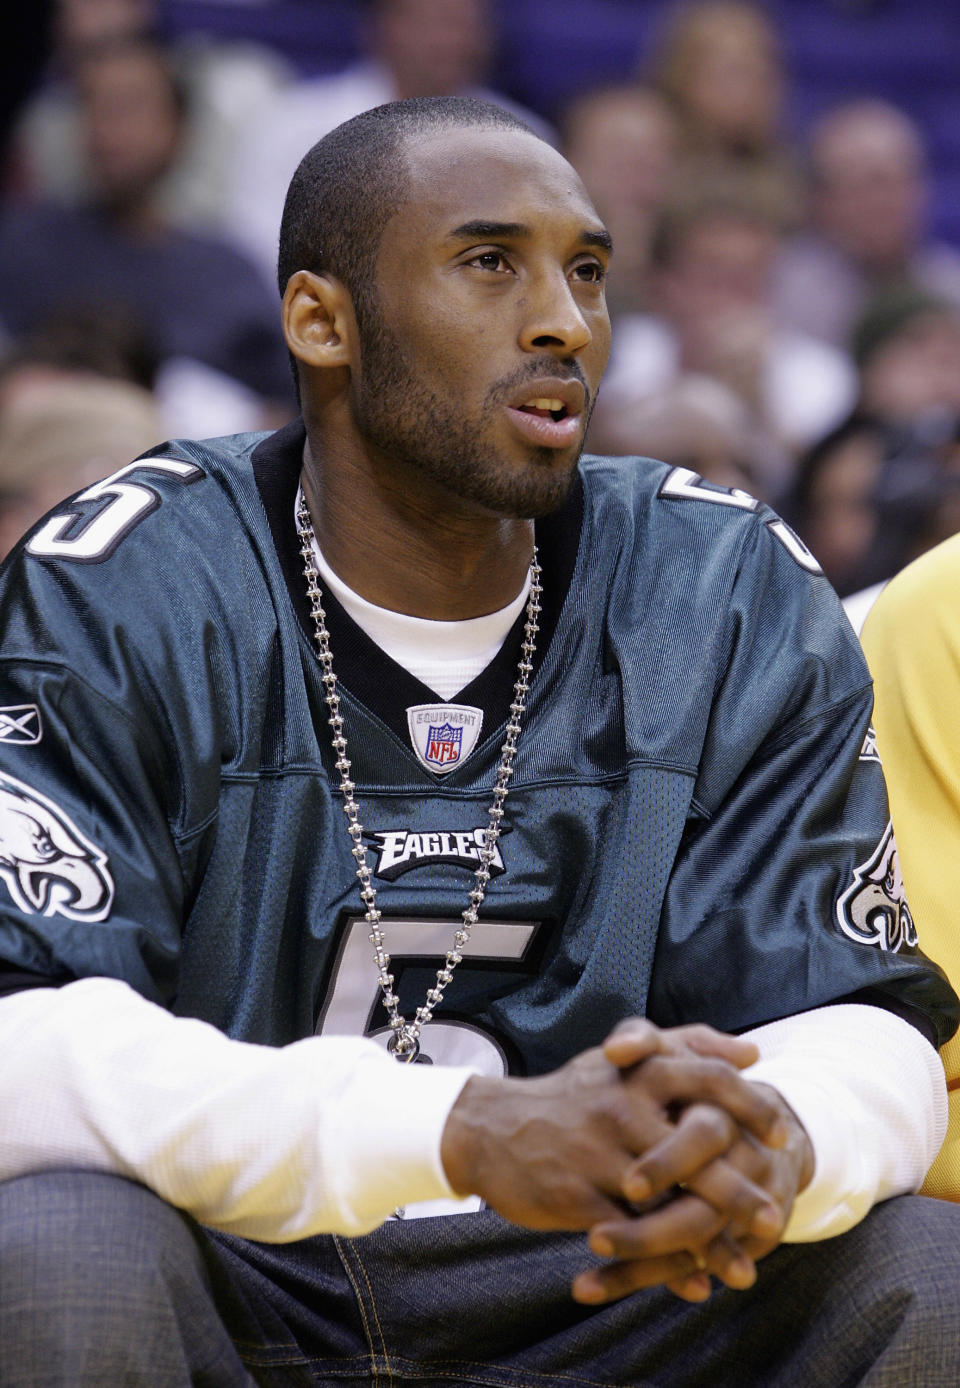 Kobe Bryant in a teal Philadelphia Eagles jersey.